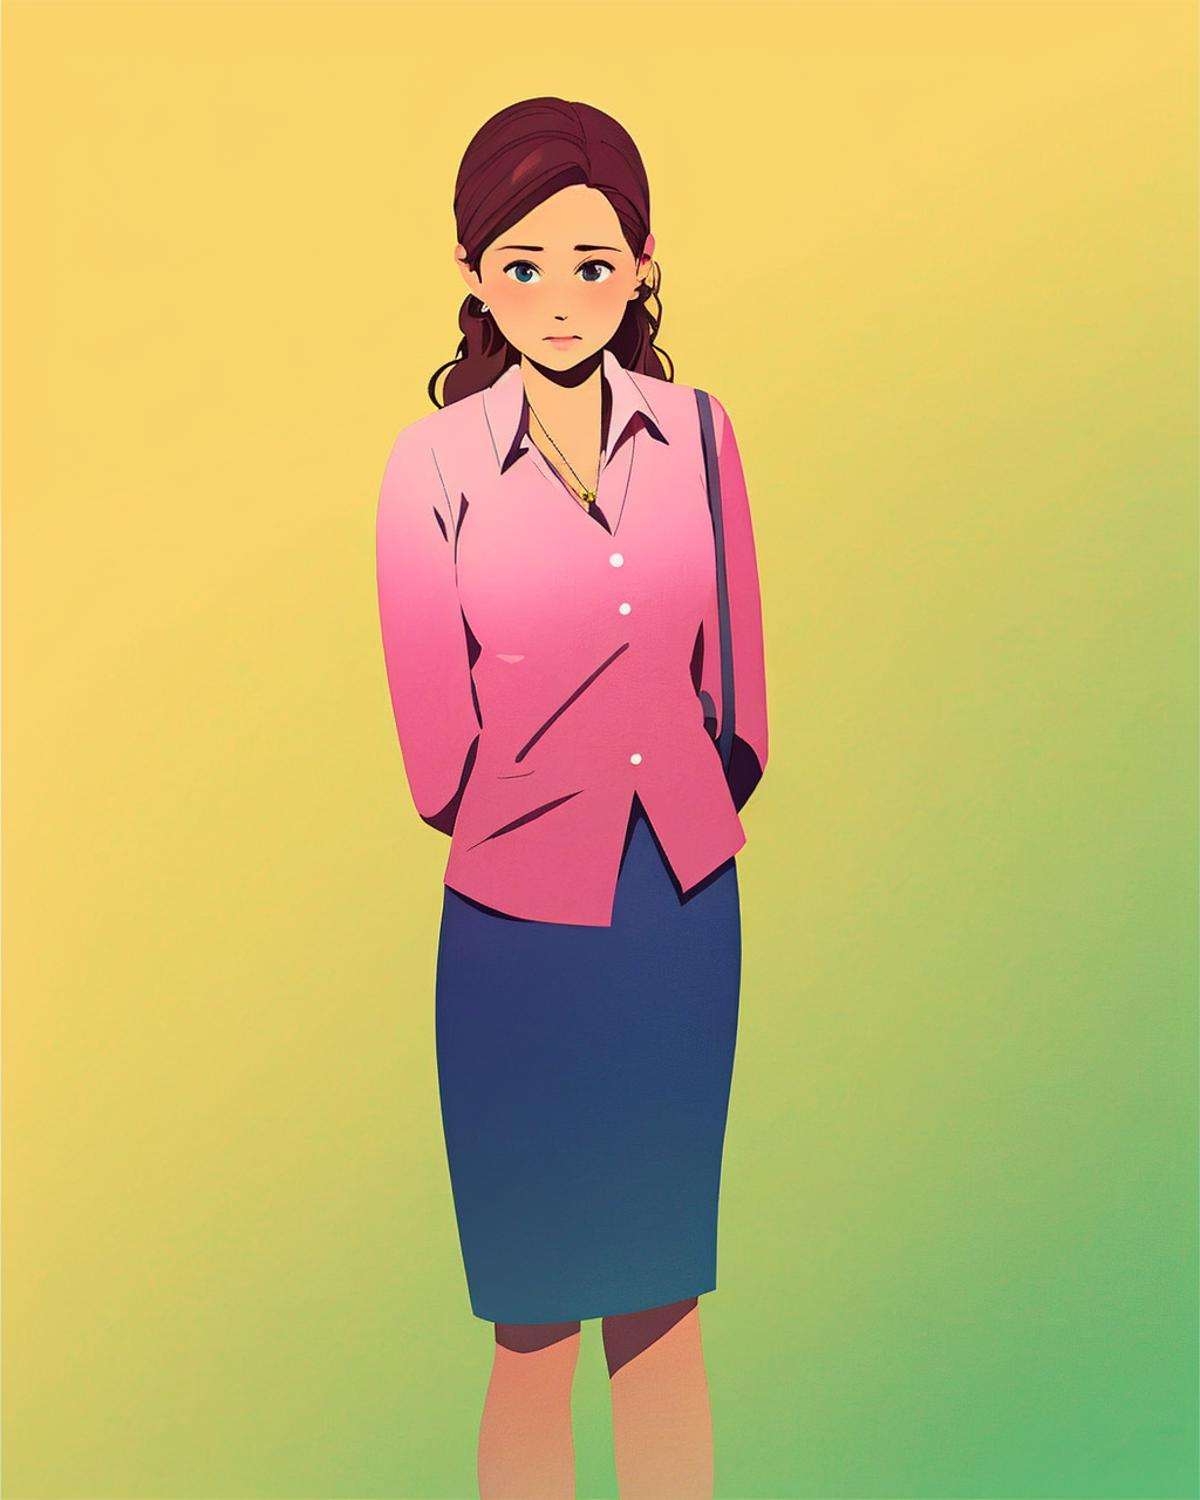 Pam Beesly (Jenna Fischer) image by Menshiki